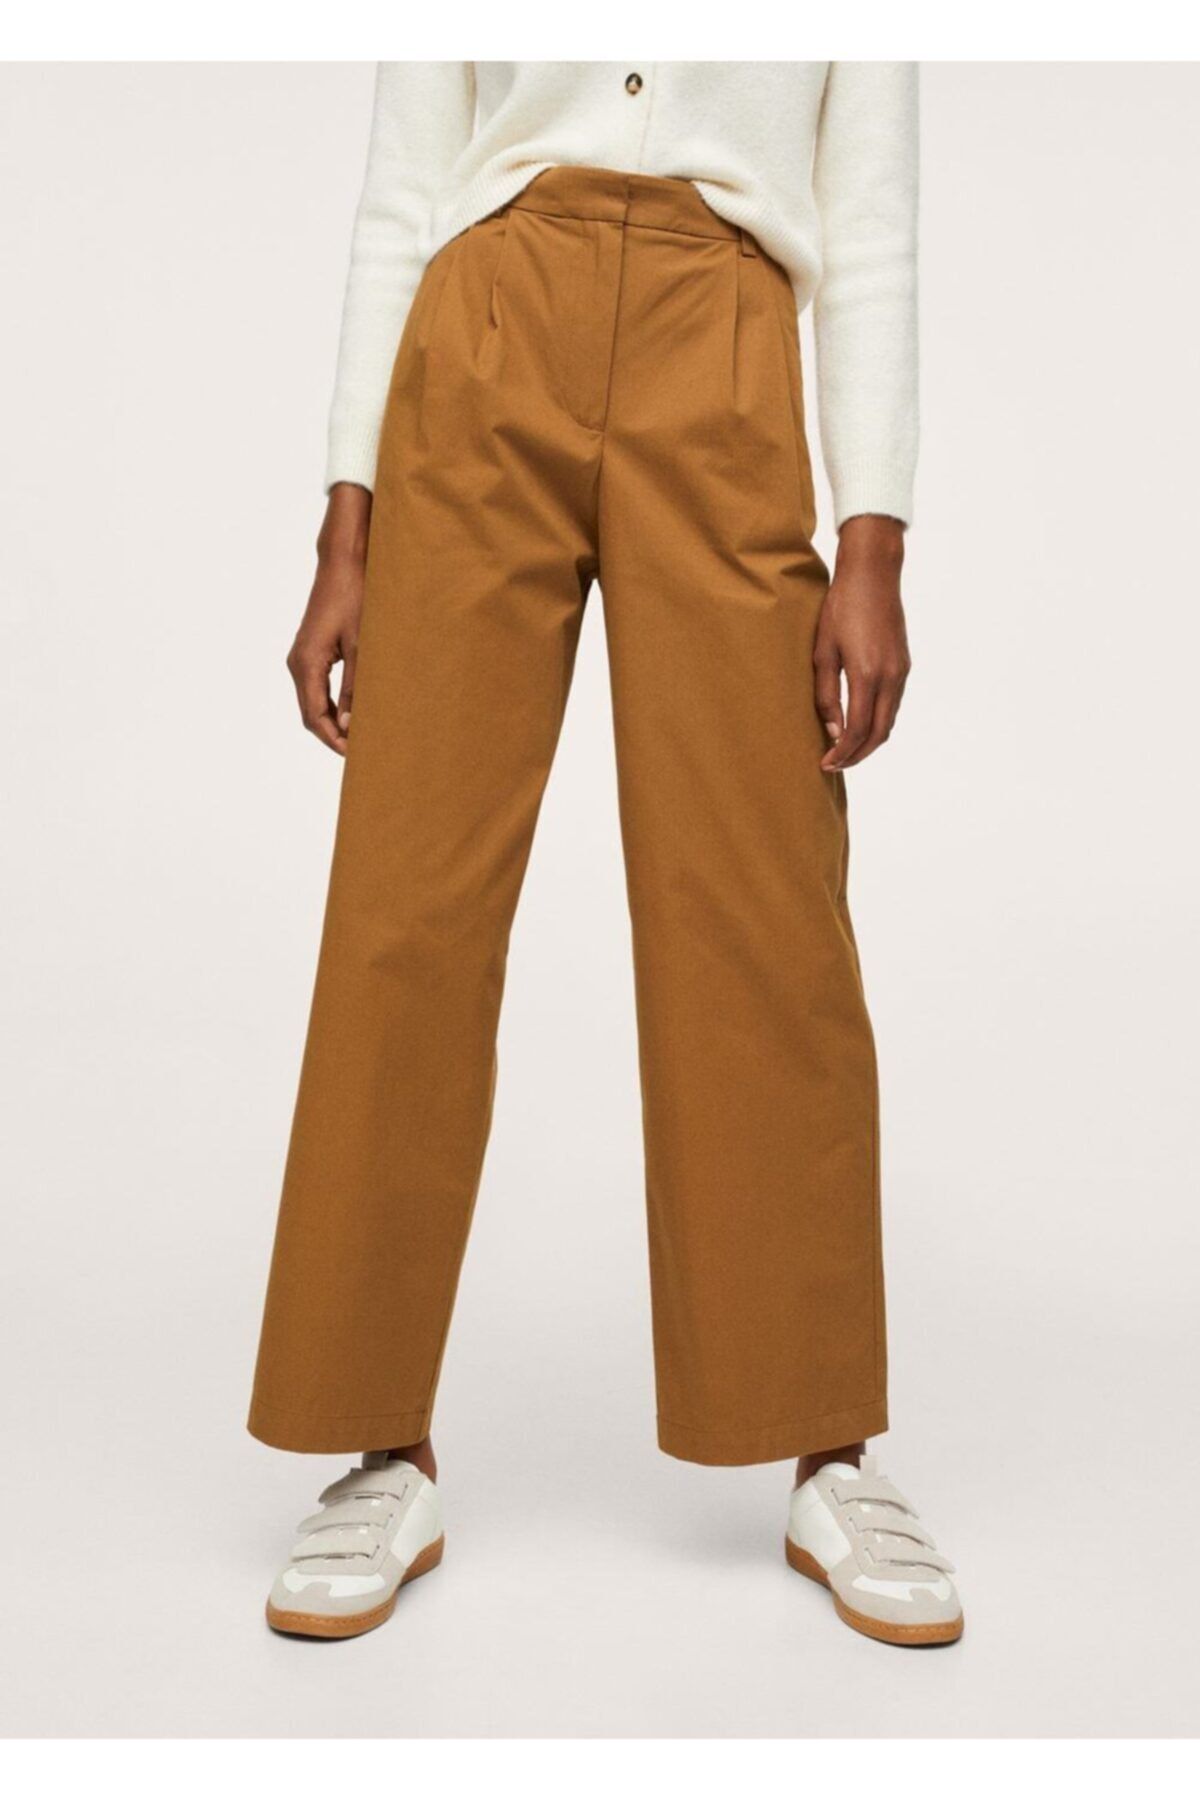 MANGO Kadın Orta Kahverengi Pilili Koton Pantolon